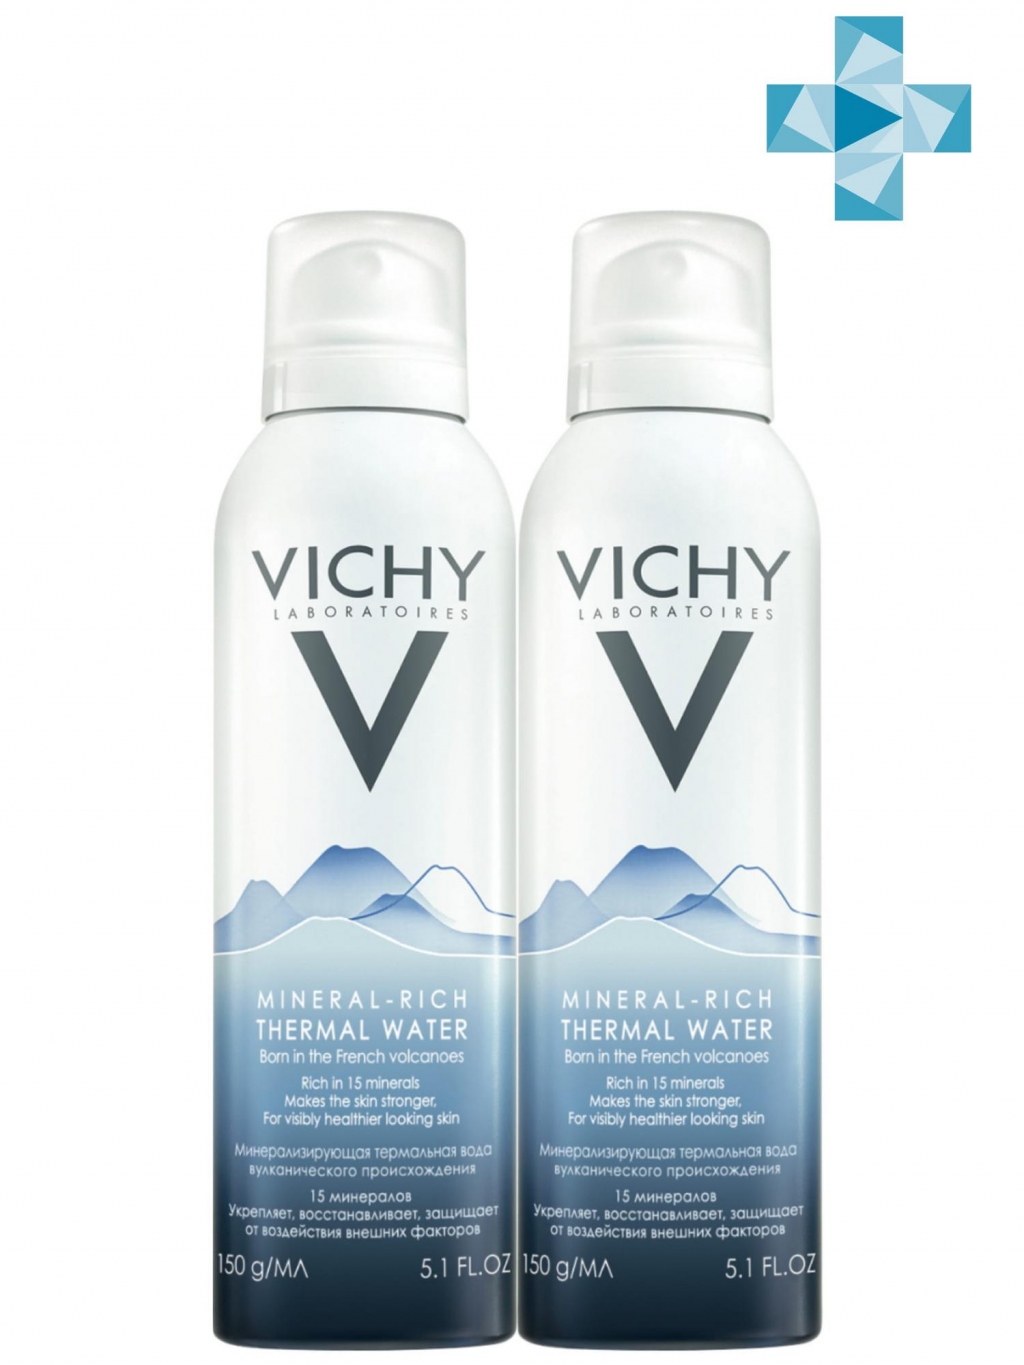 Vichy Комплект Термальная минерализирующая вода Vichy Спа, 2х150 мл (Vichy, Thermal Water Vichy)